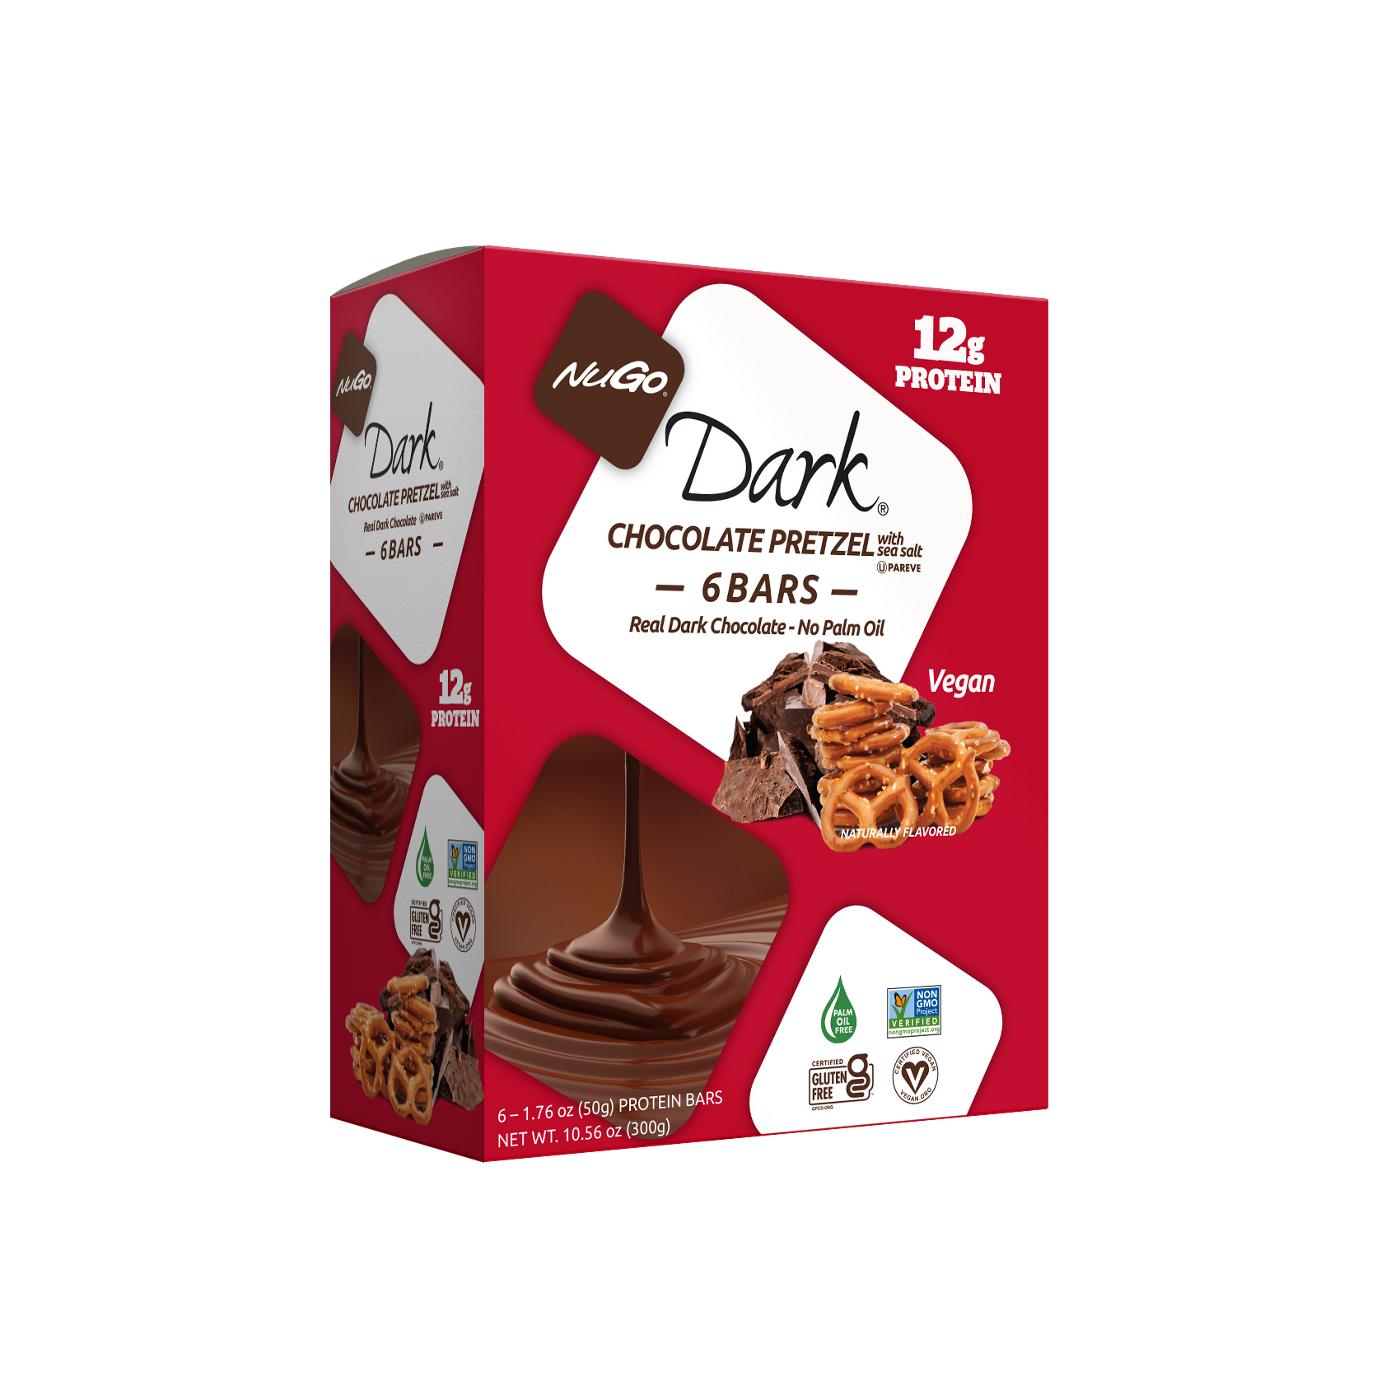 NuGo Dark 12g Protein Bars - Chocolate Pretzel; image 3 of 4